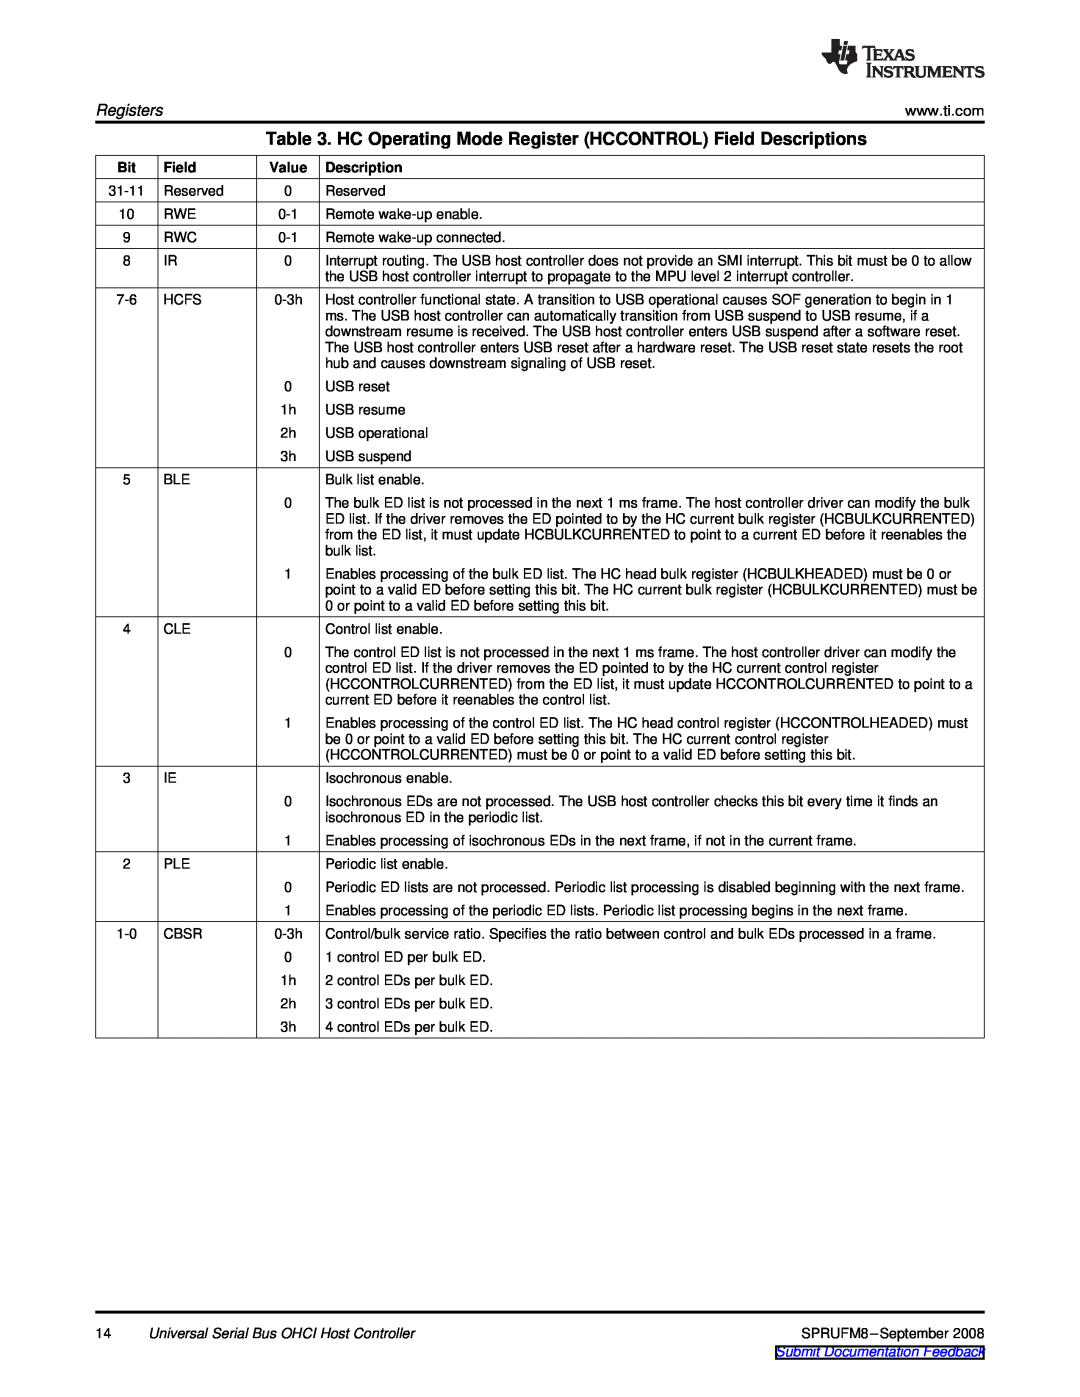 Texas Instruments TMS320C6747 DSP manual HC Operating Mode Register HCCONTROL Field Descriptions, Value 